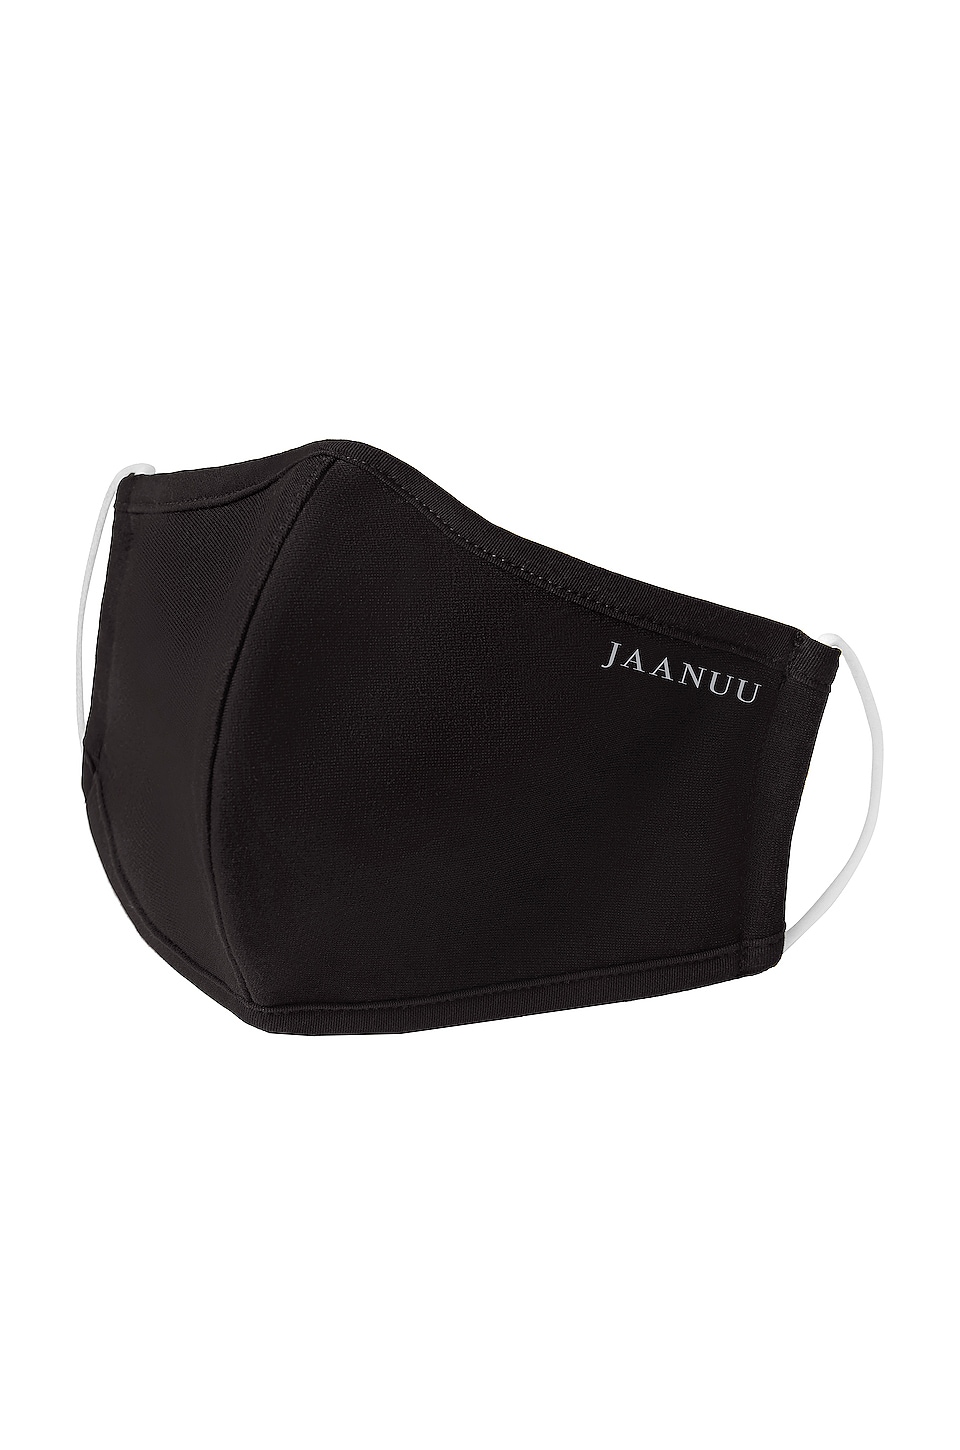 Jaanuu Reusable Antimicrobial Face Mask (5 Pack) Black